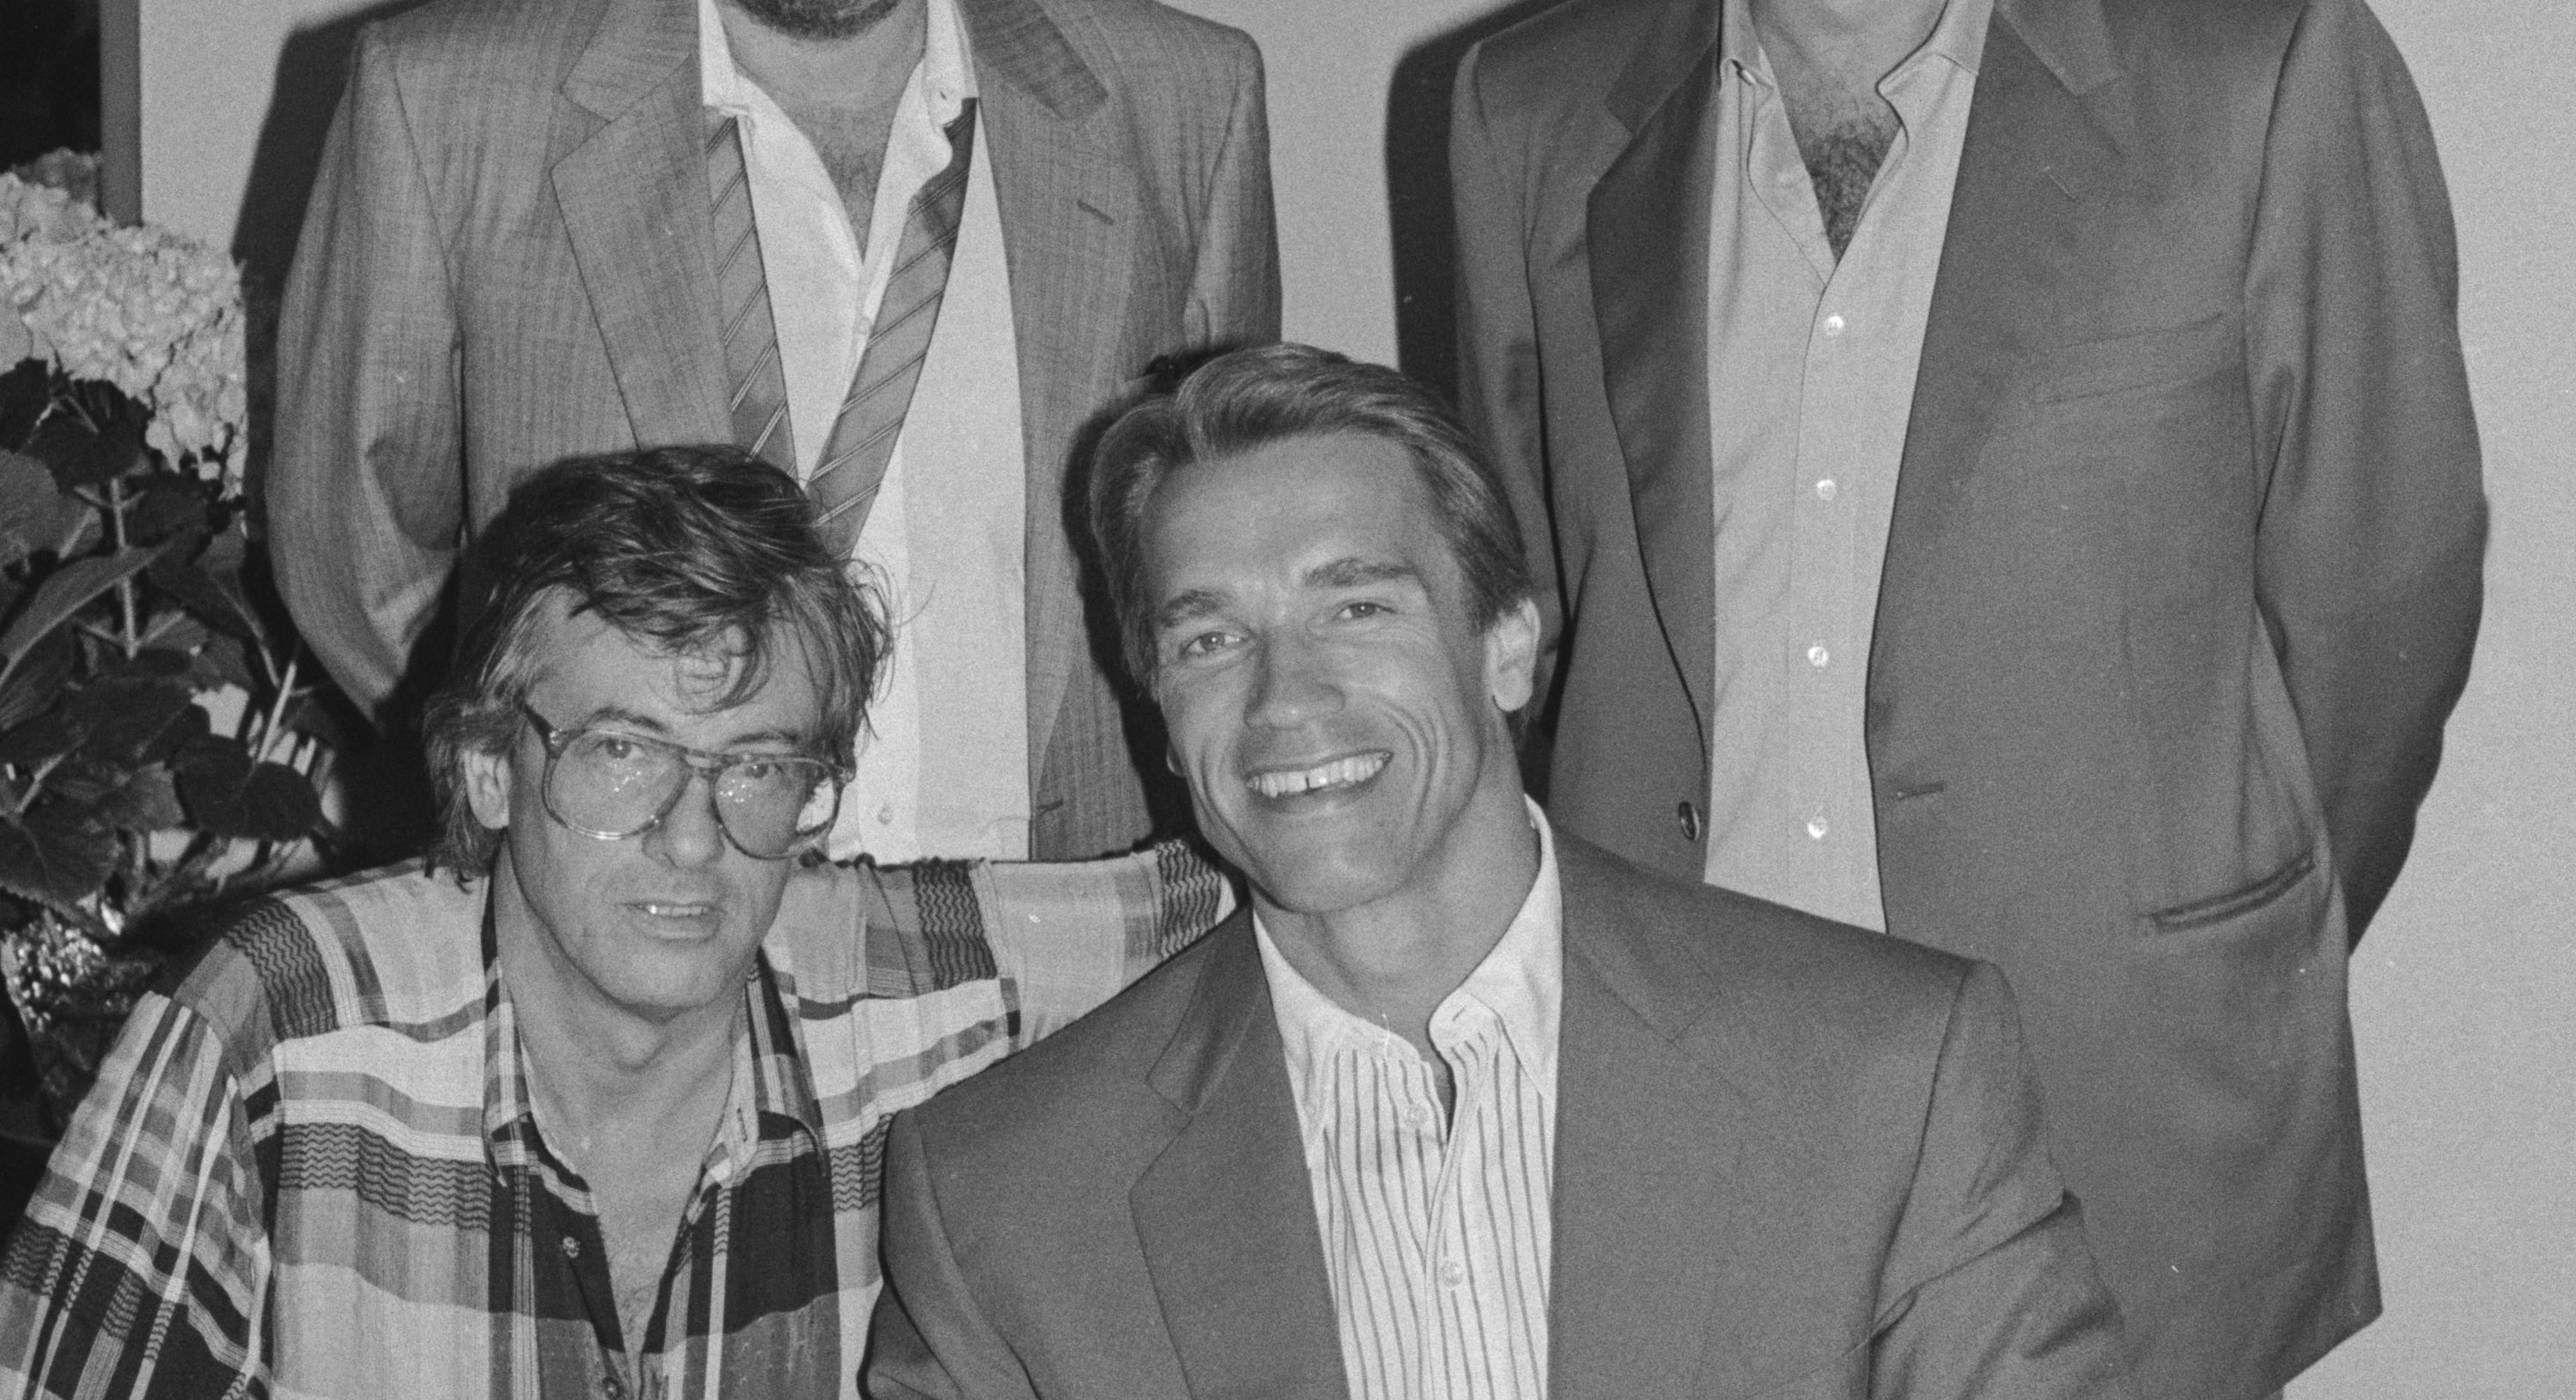 Paul Verhoeven and Arnold Schwarzenegger at Cannes Film Festival in 1988